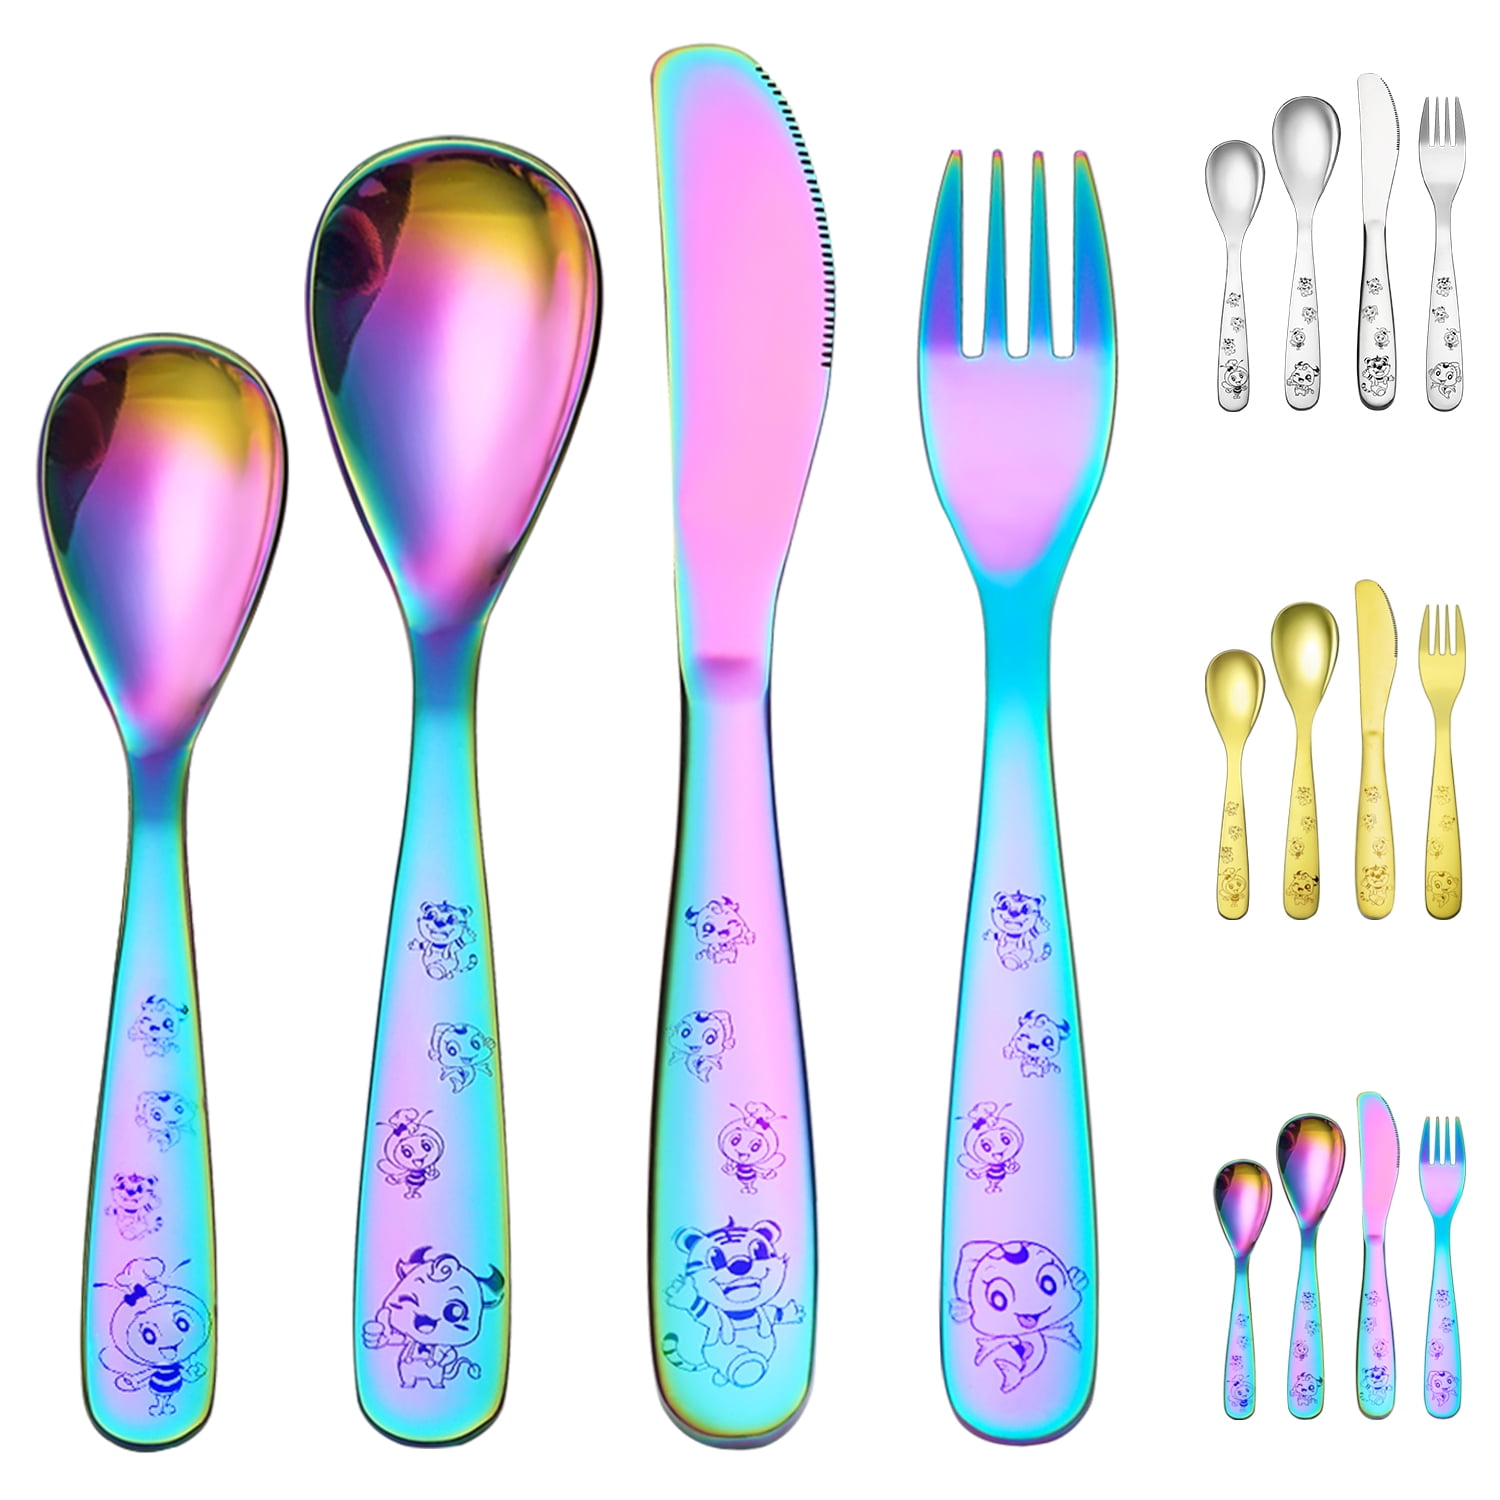 Poylim kids silverware, poylim stainless steel children flatware set,  toddler utensils set of 2, rainbow